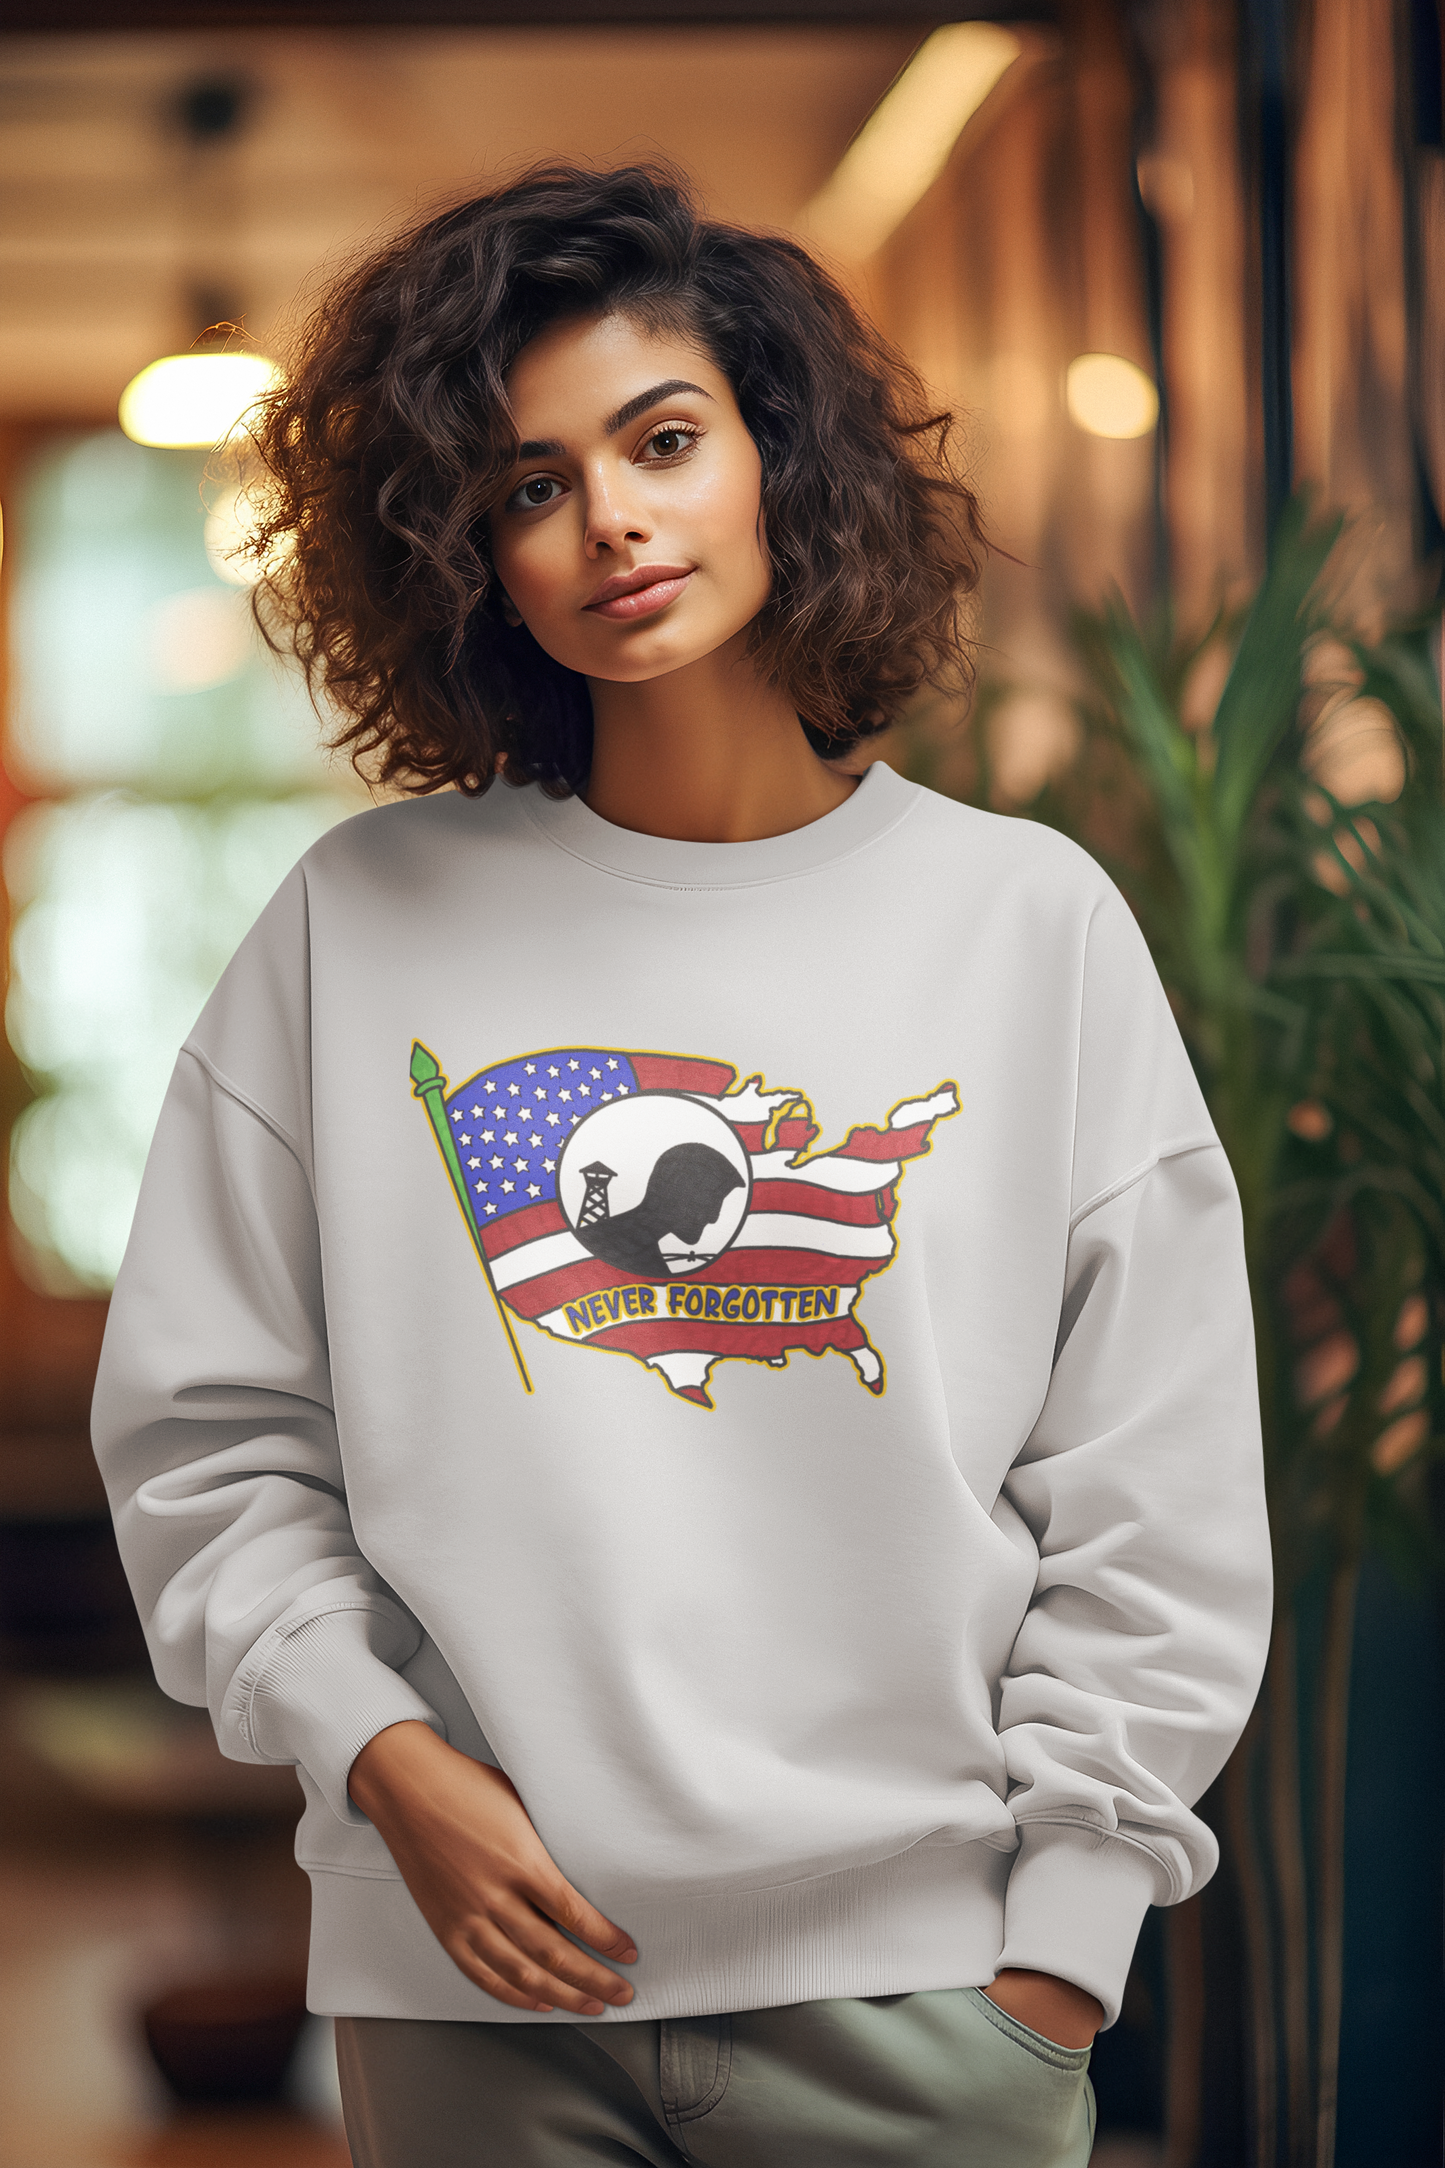 ... NEVER FORGOTTEN Heavy Weight Patriotic Sweatshirt (S-5XL):  Women's Gildan 18000 - FREE SHIPPING